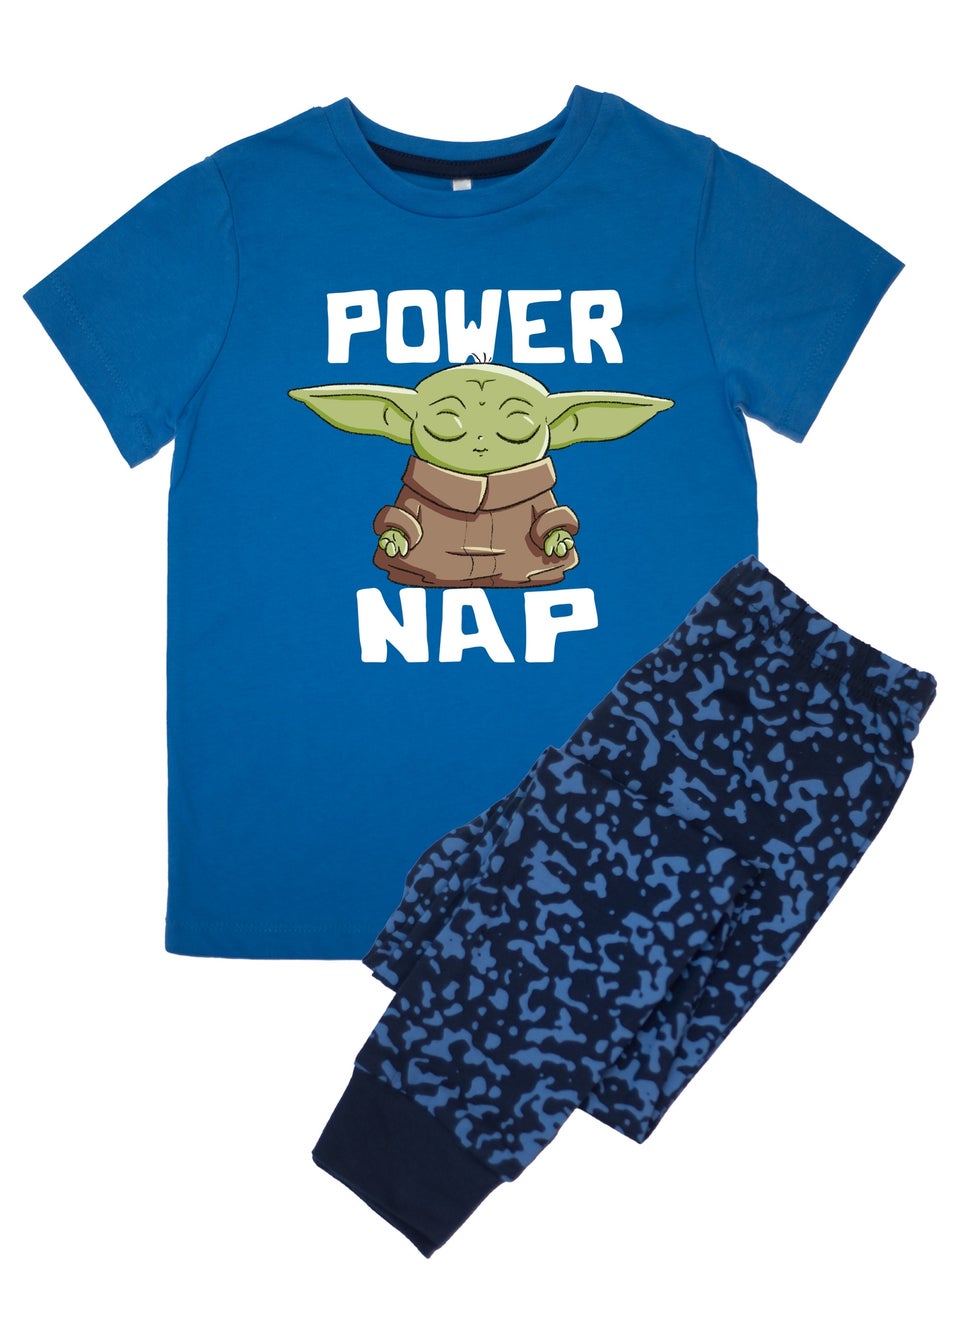 Star Wars The Mandalorian Power Nap Kids Royal Blue Camo Pyjamas (3-8 Years)